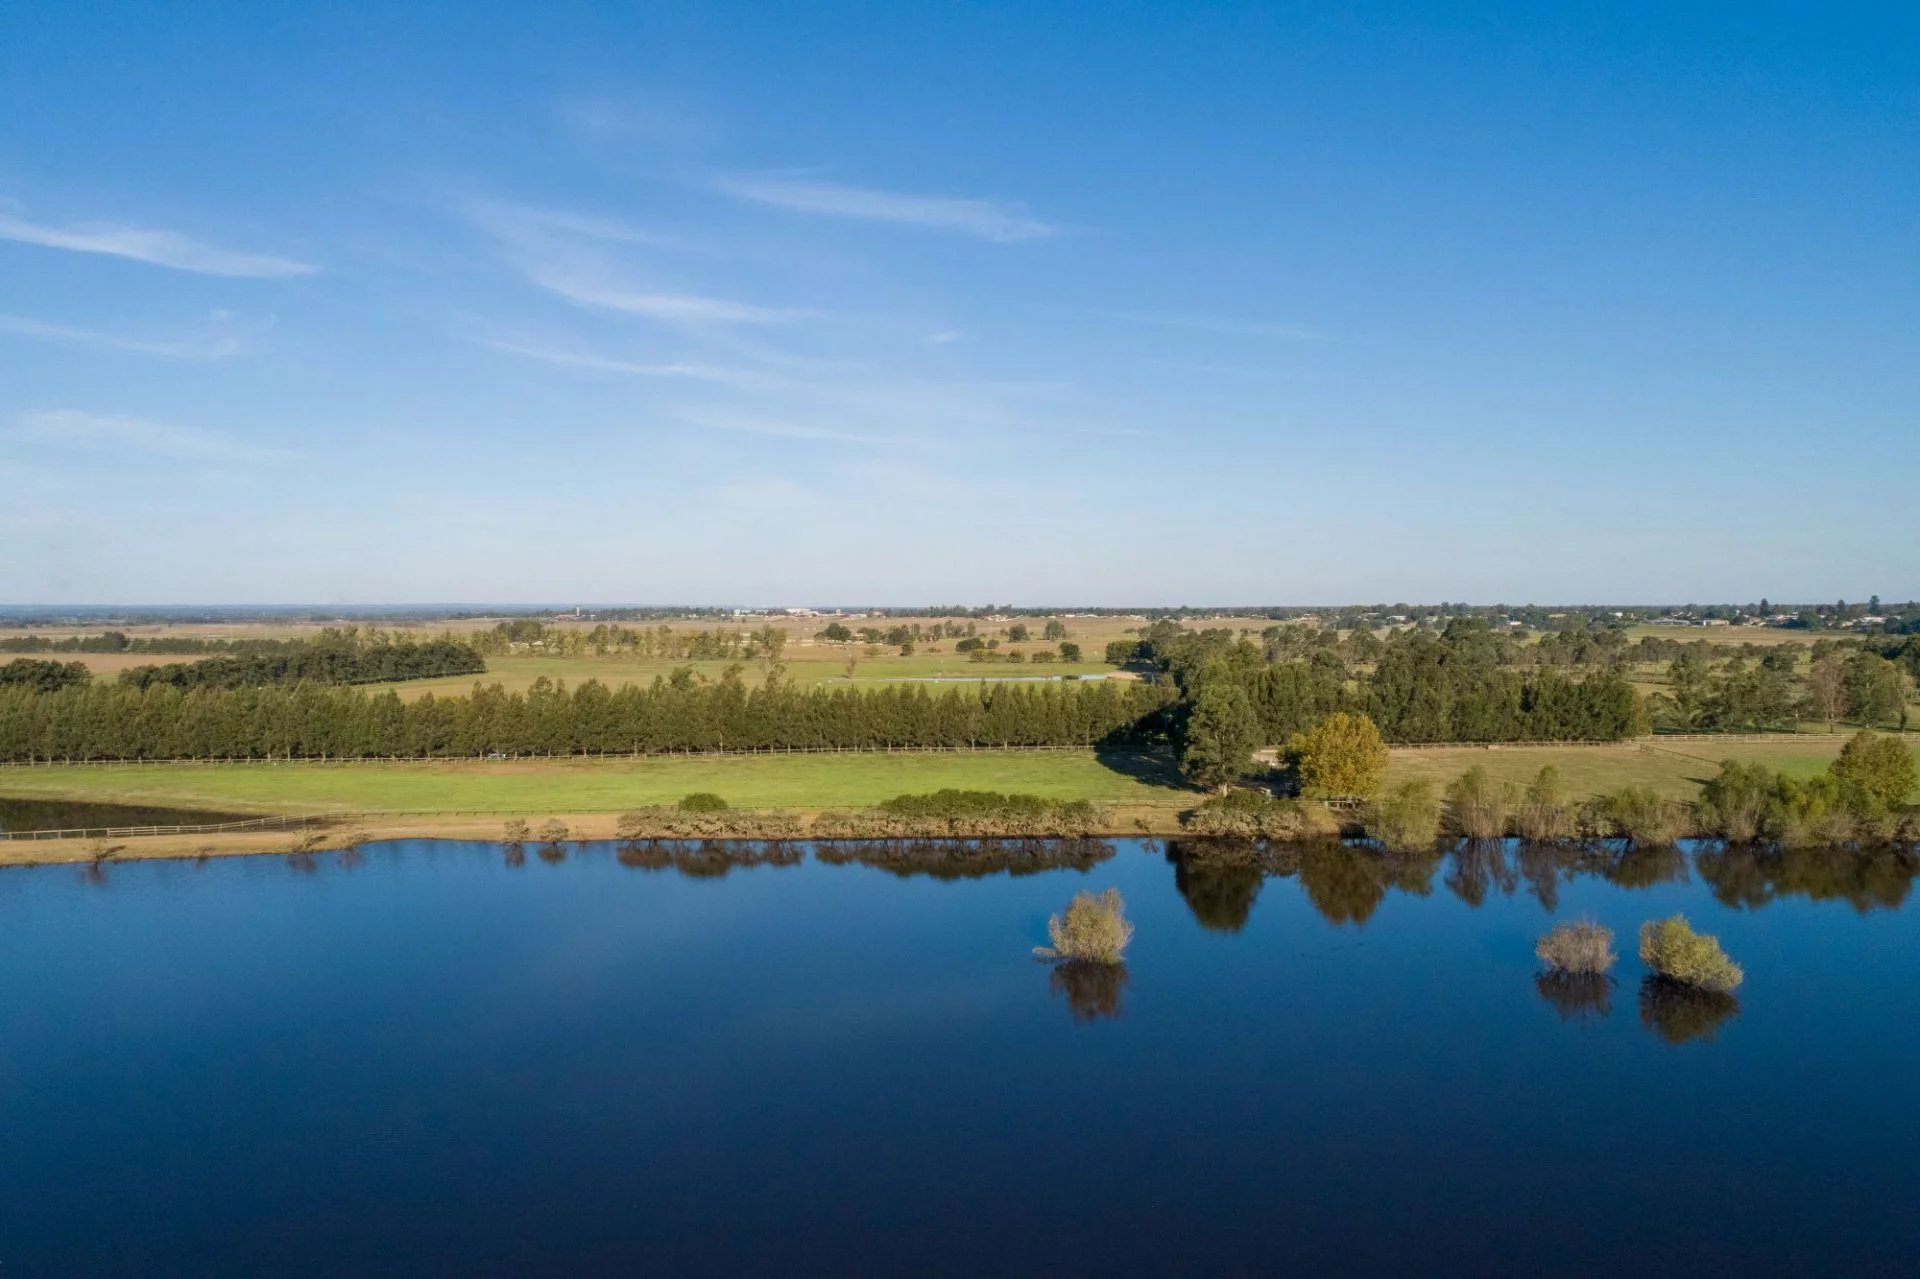 sydney-s premier polo club in an idyllic setting by the hawkesbury river image28